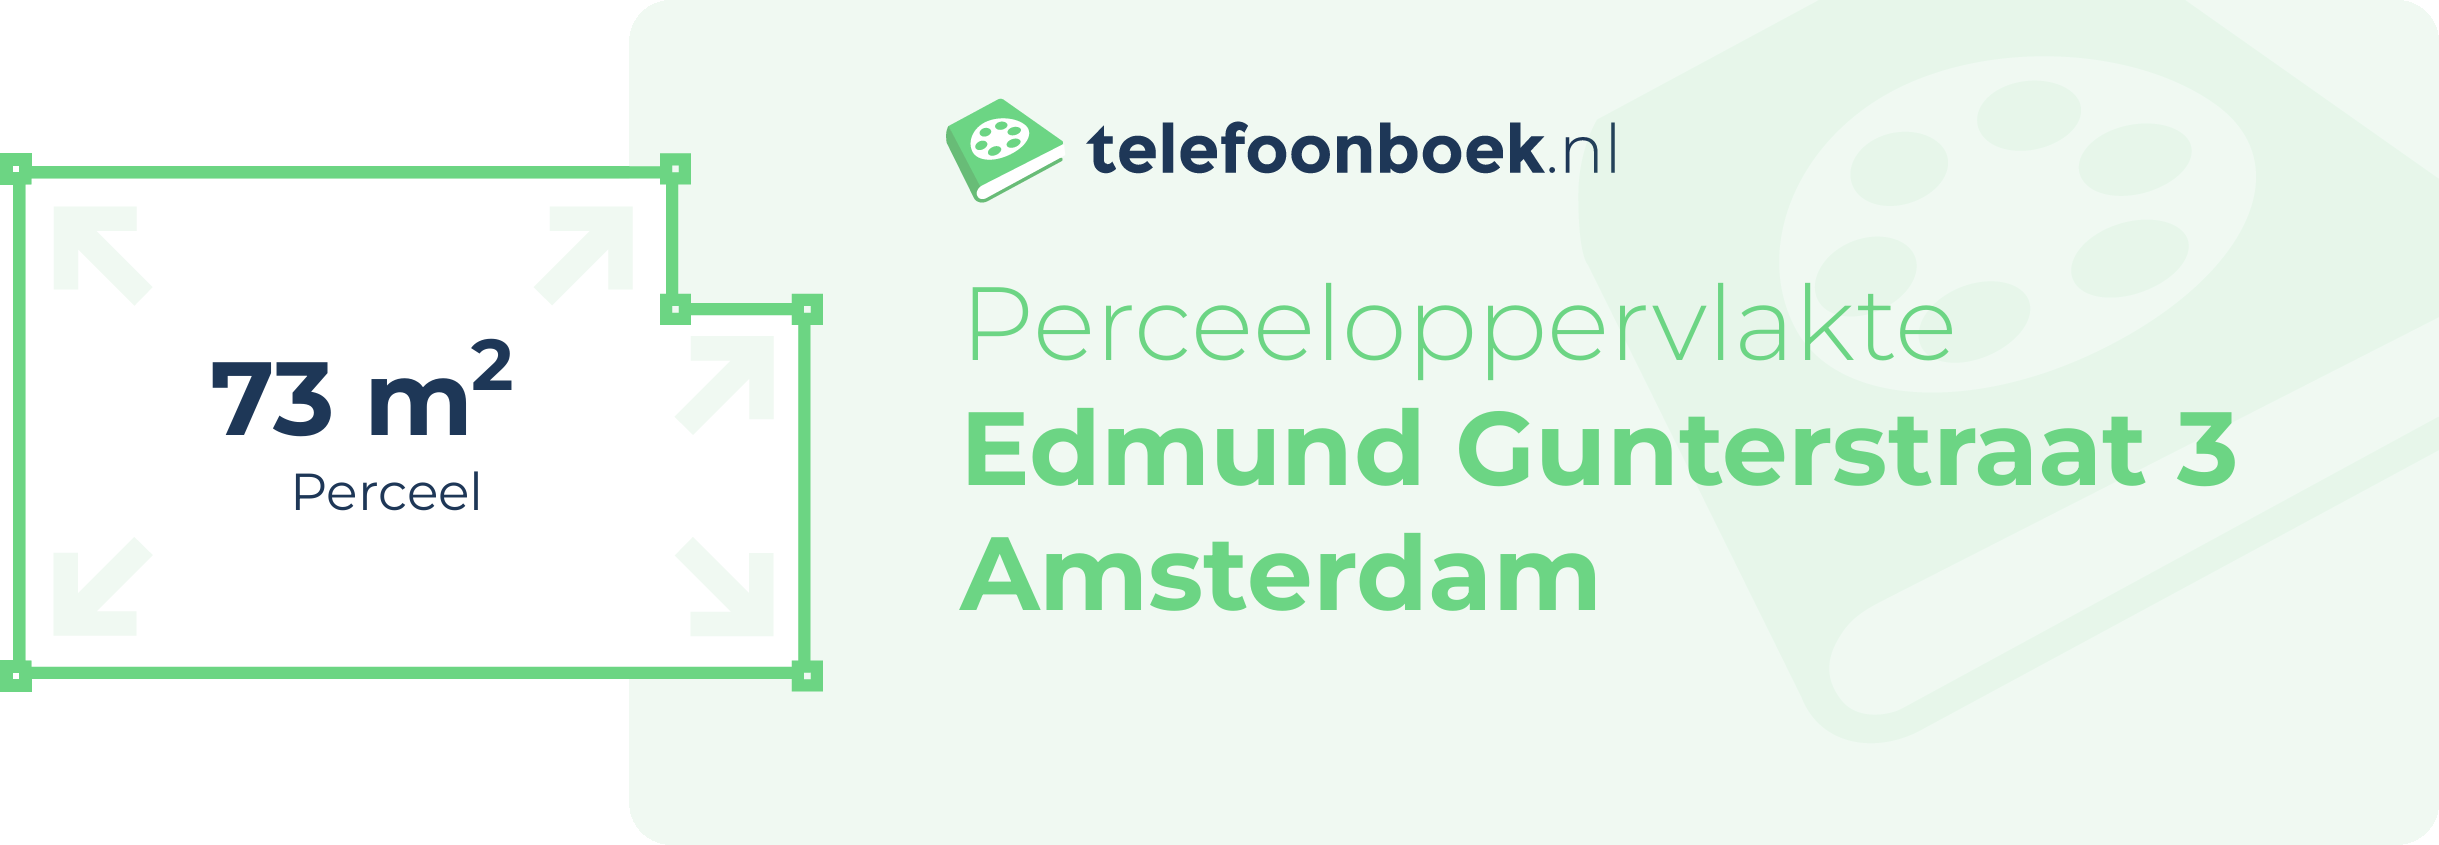 Perceeloppervlakte Edmund Gunterstraat 3 Amsterdam